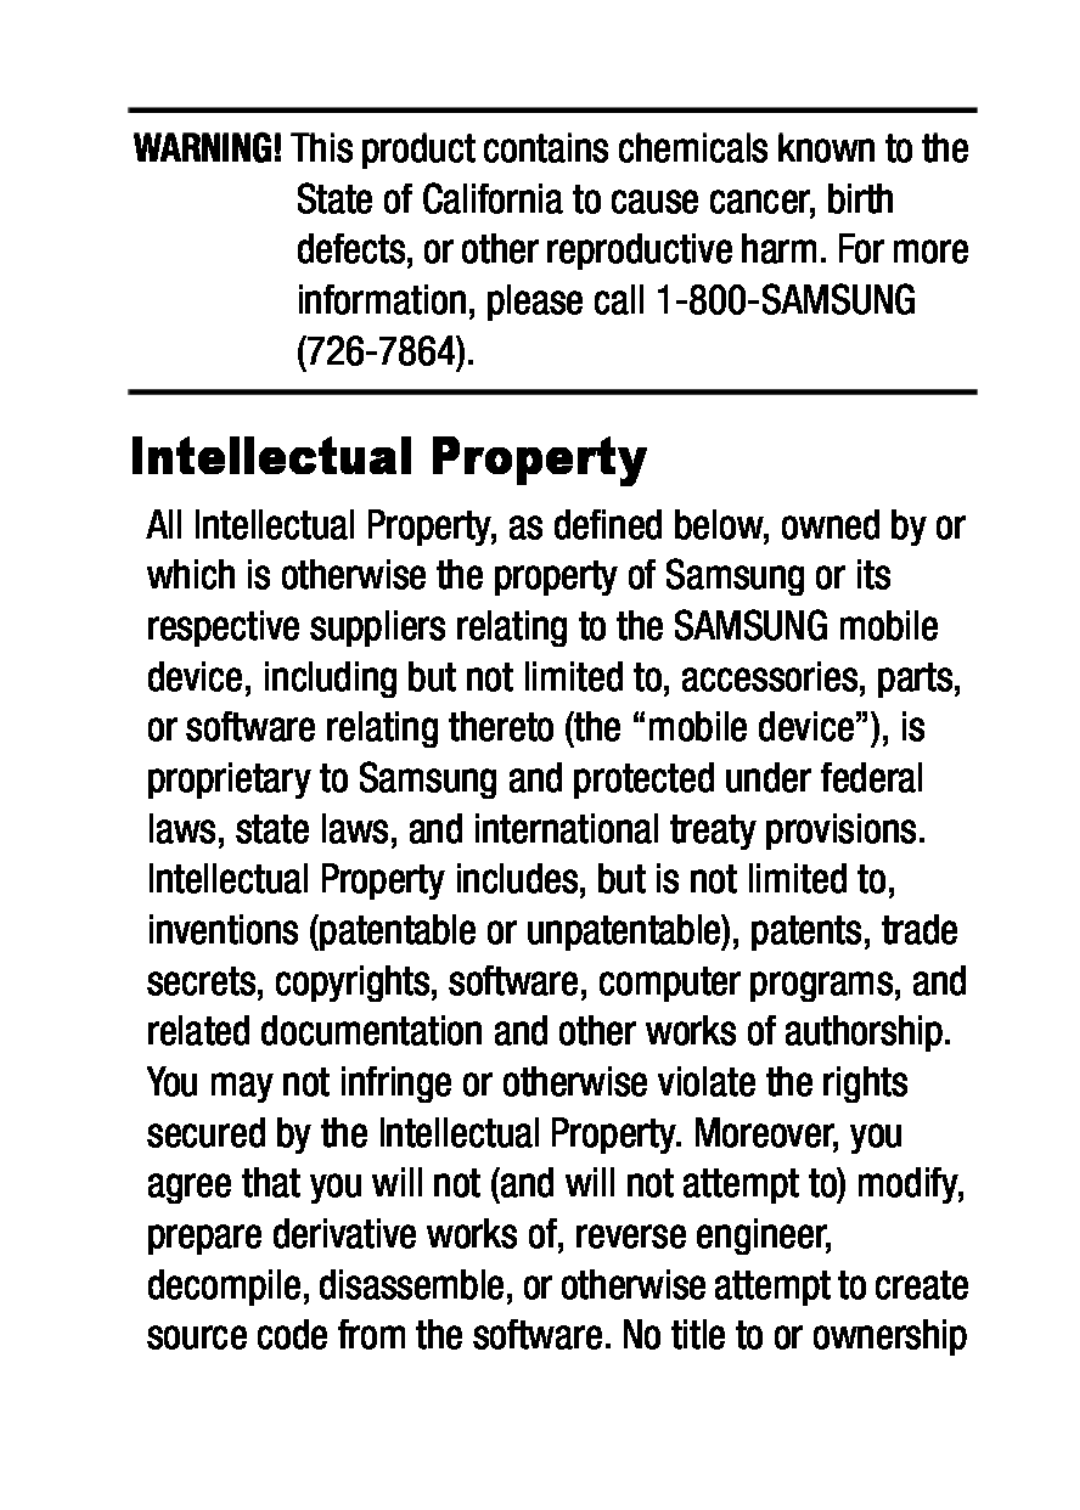 Intellectual Property Galaxy Tab S2 9.7 US Cellular